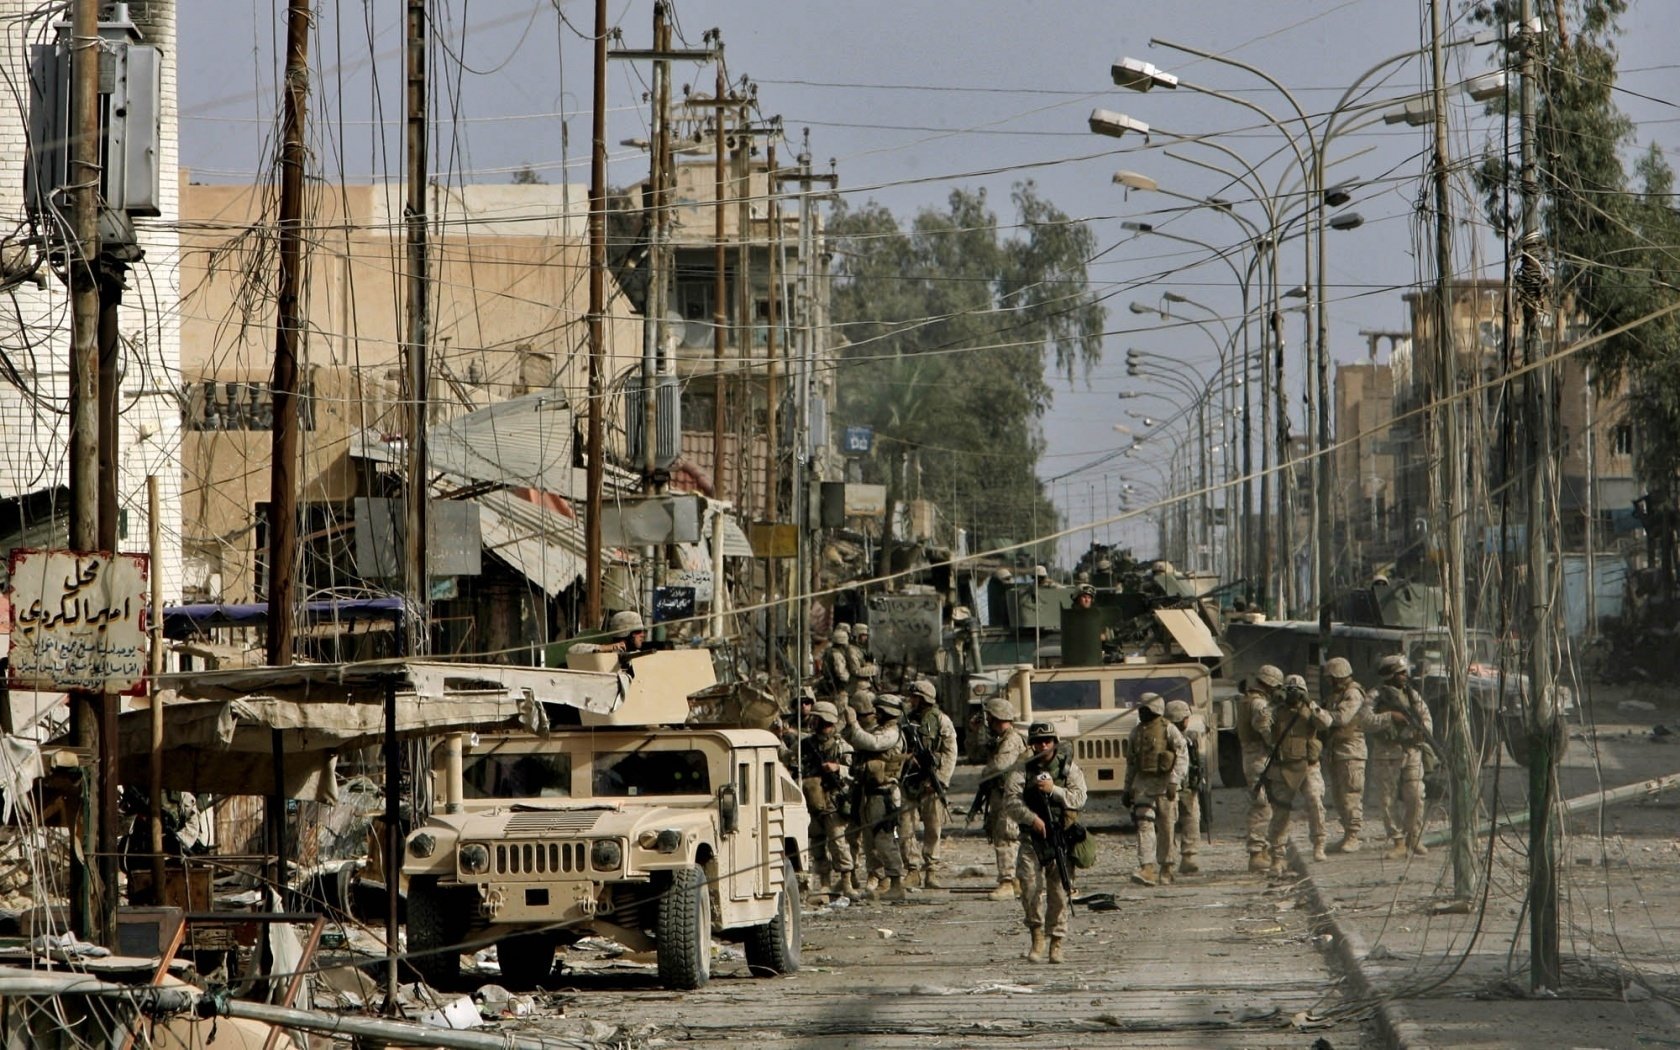 Iraq War Wallpapers